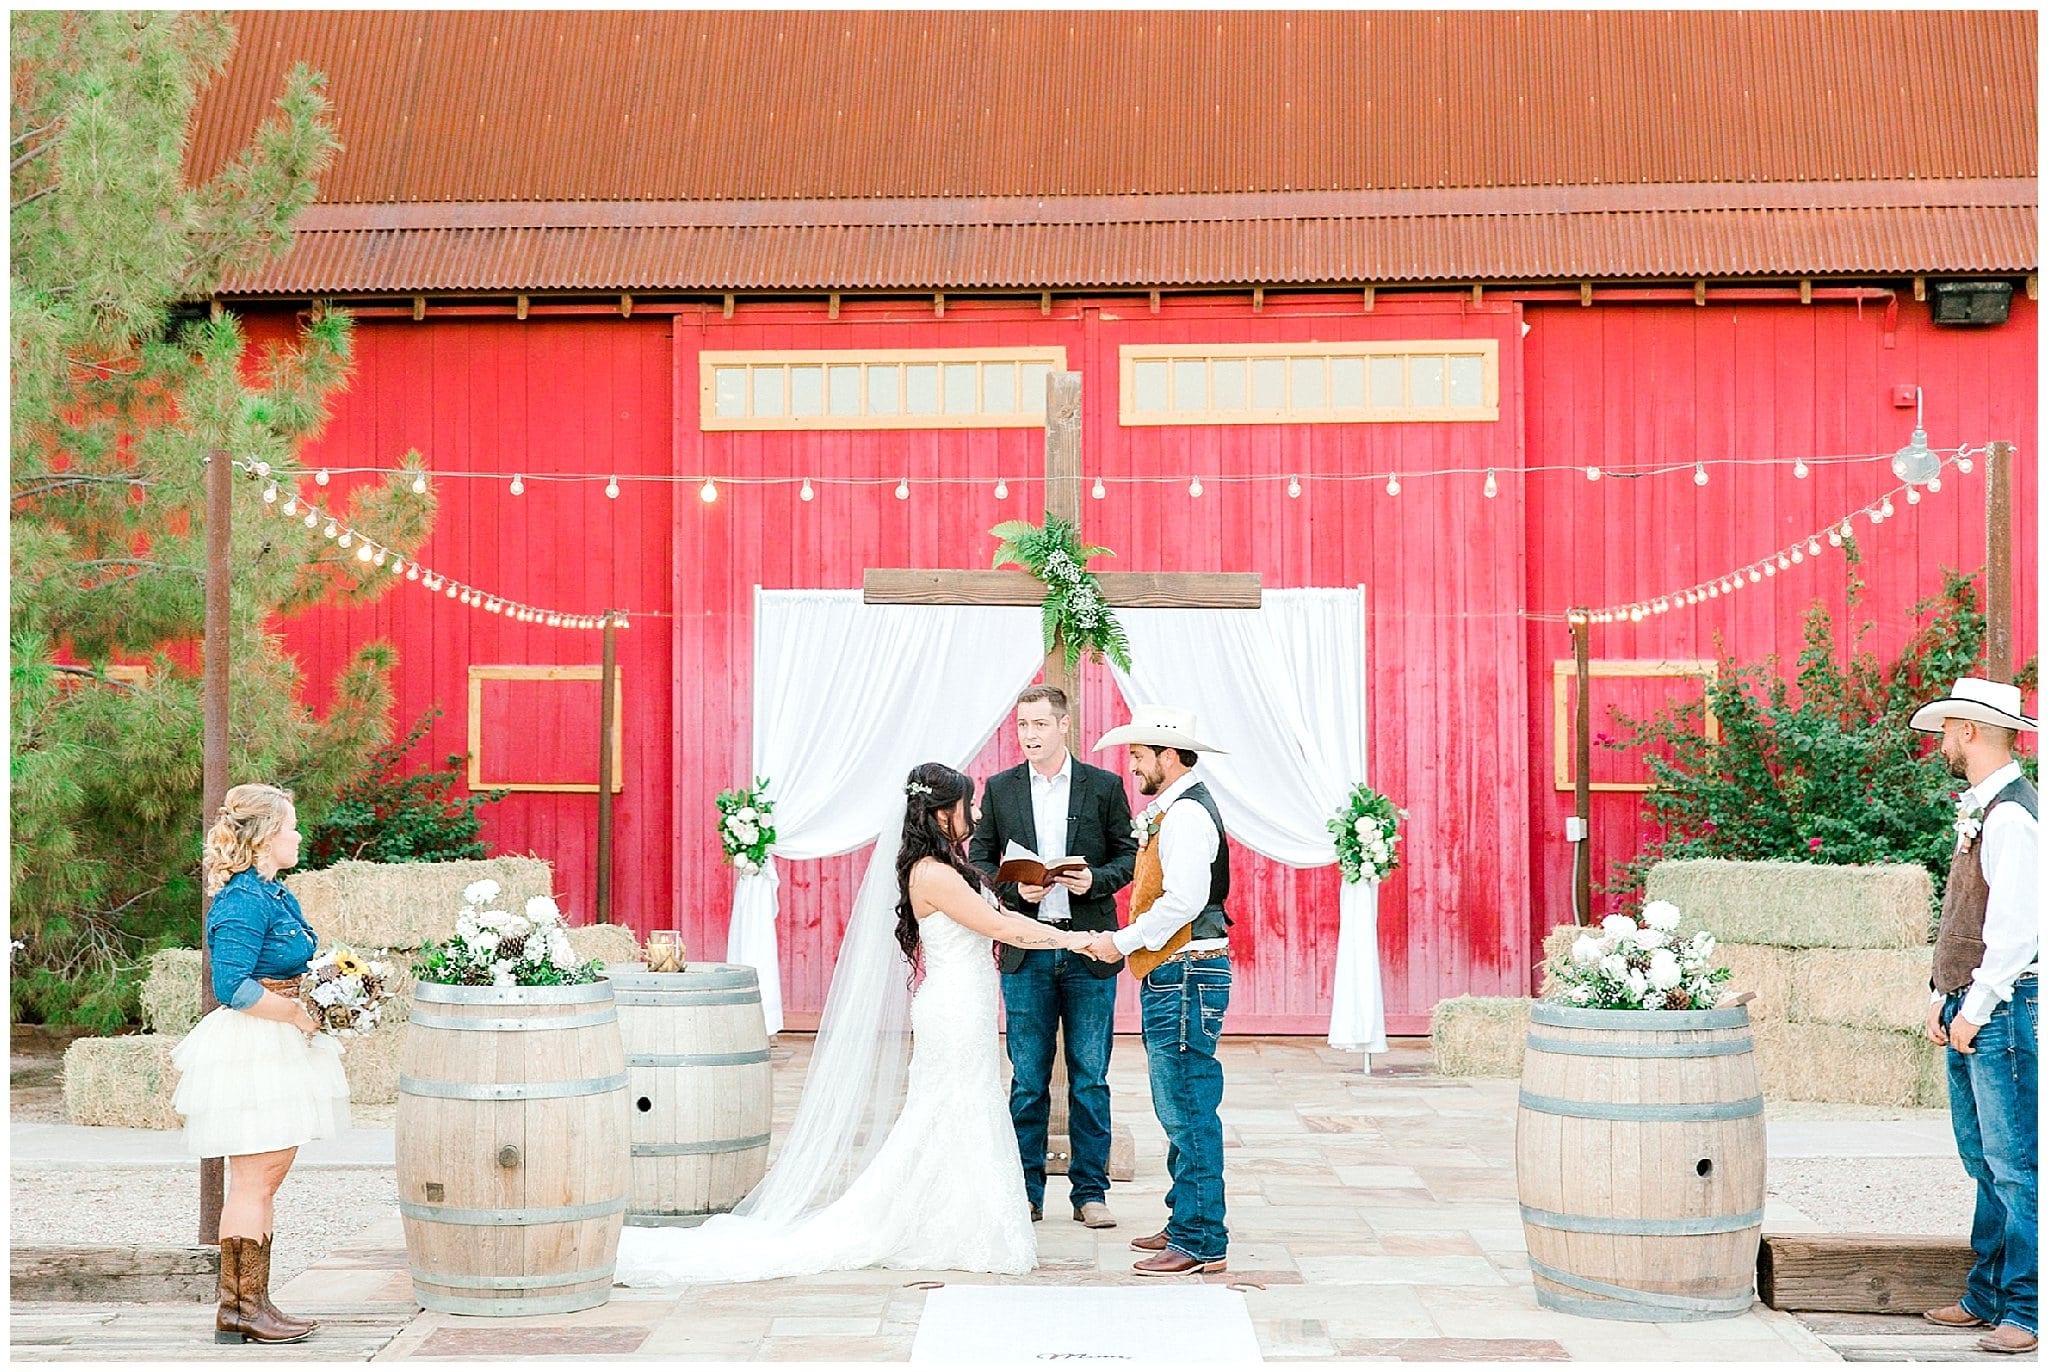 Windmill Winery Barn Wedding, Country Wedding, Outdoor Wedding, Country themed wedding, Tractors, John Deere Wedding, Big Red Barn Wedding